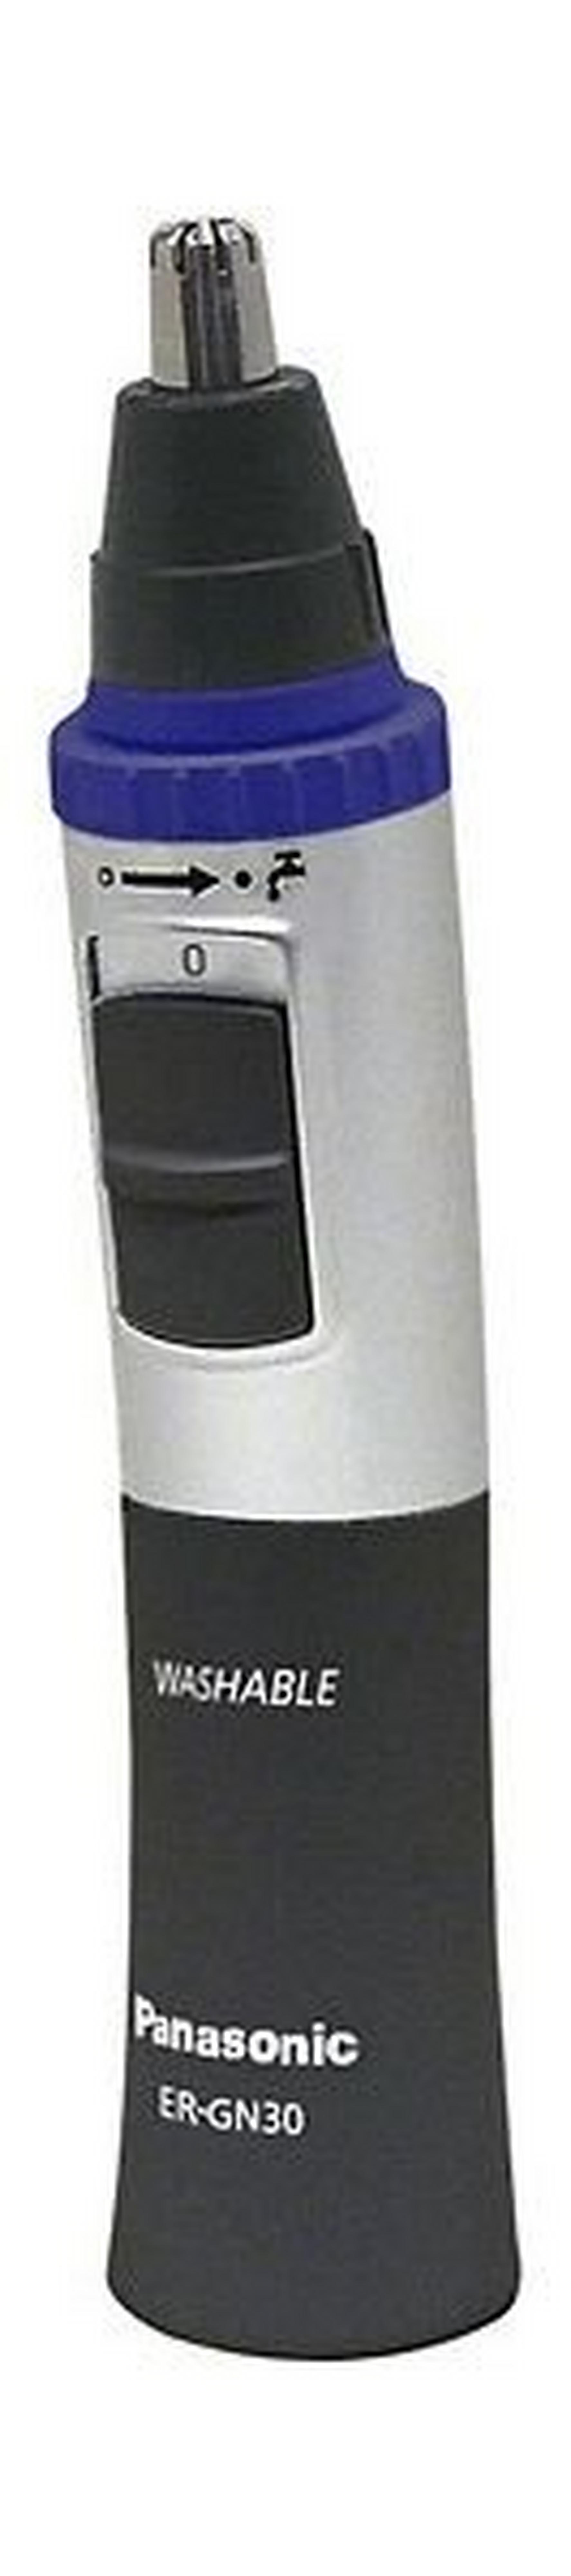 Panasonic ER-GN30 Nose Trimmer